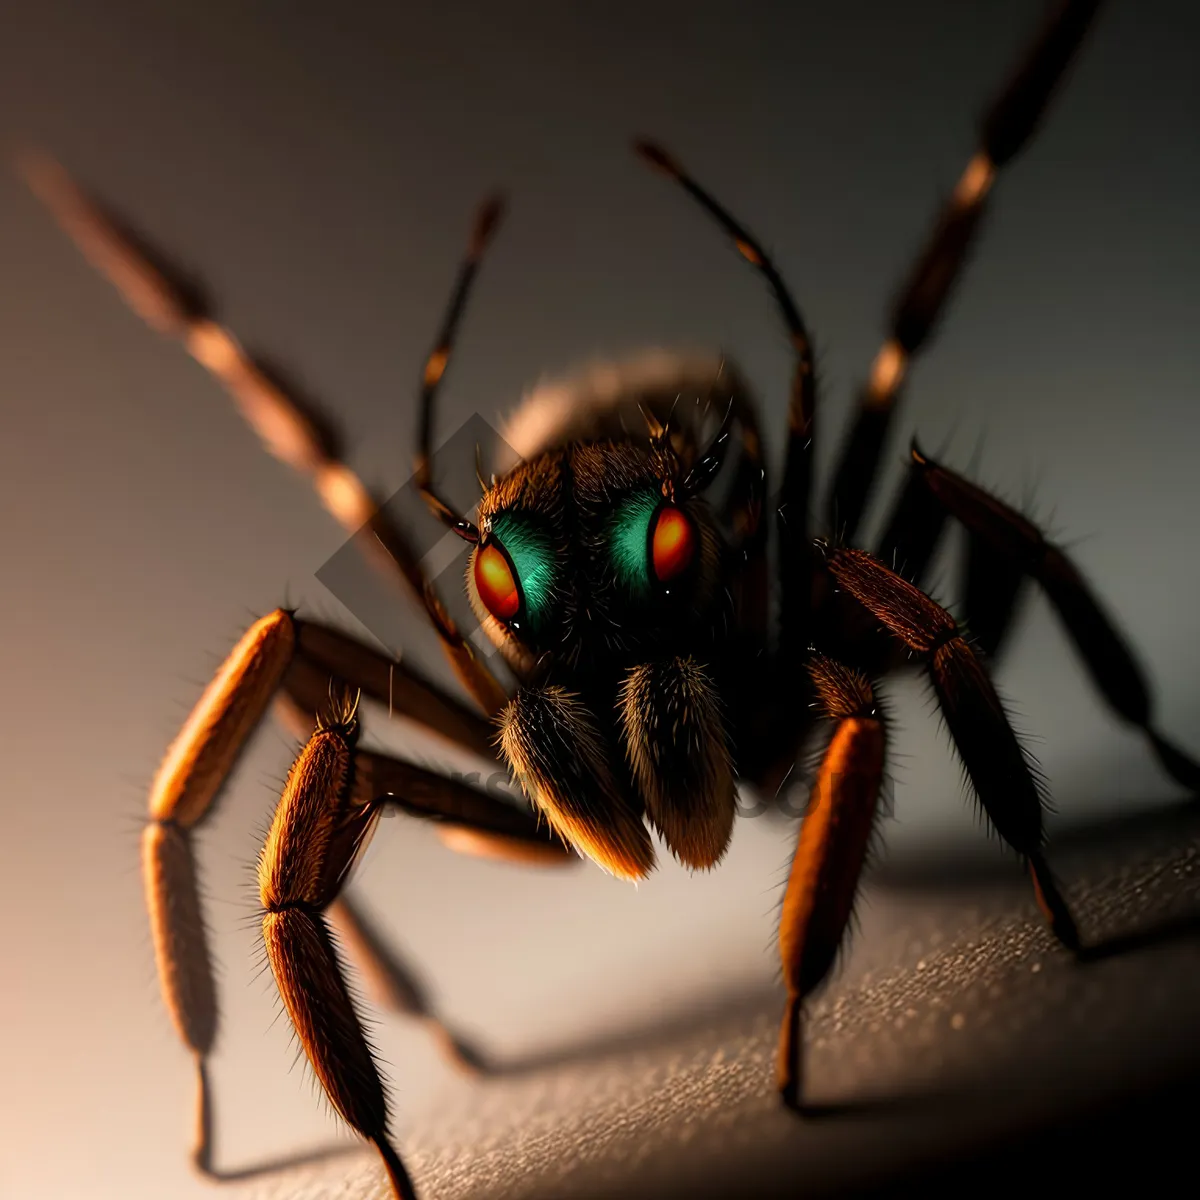 Picture of Black Widow Arachnid - Close-up Wildlife